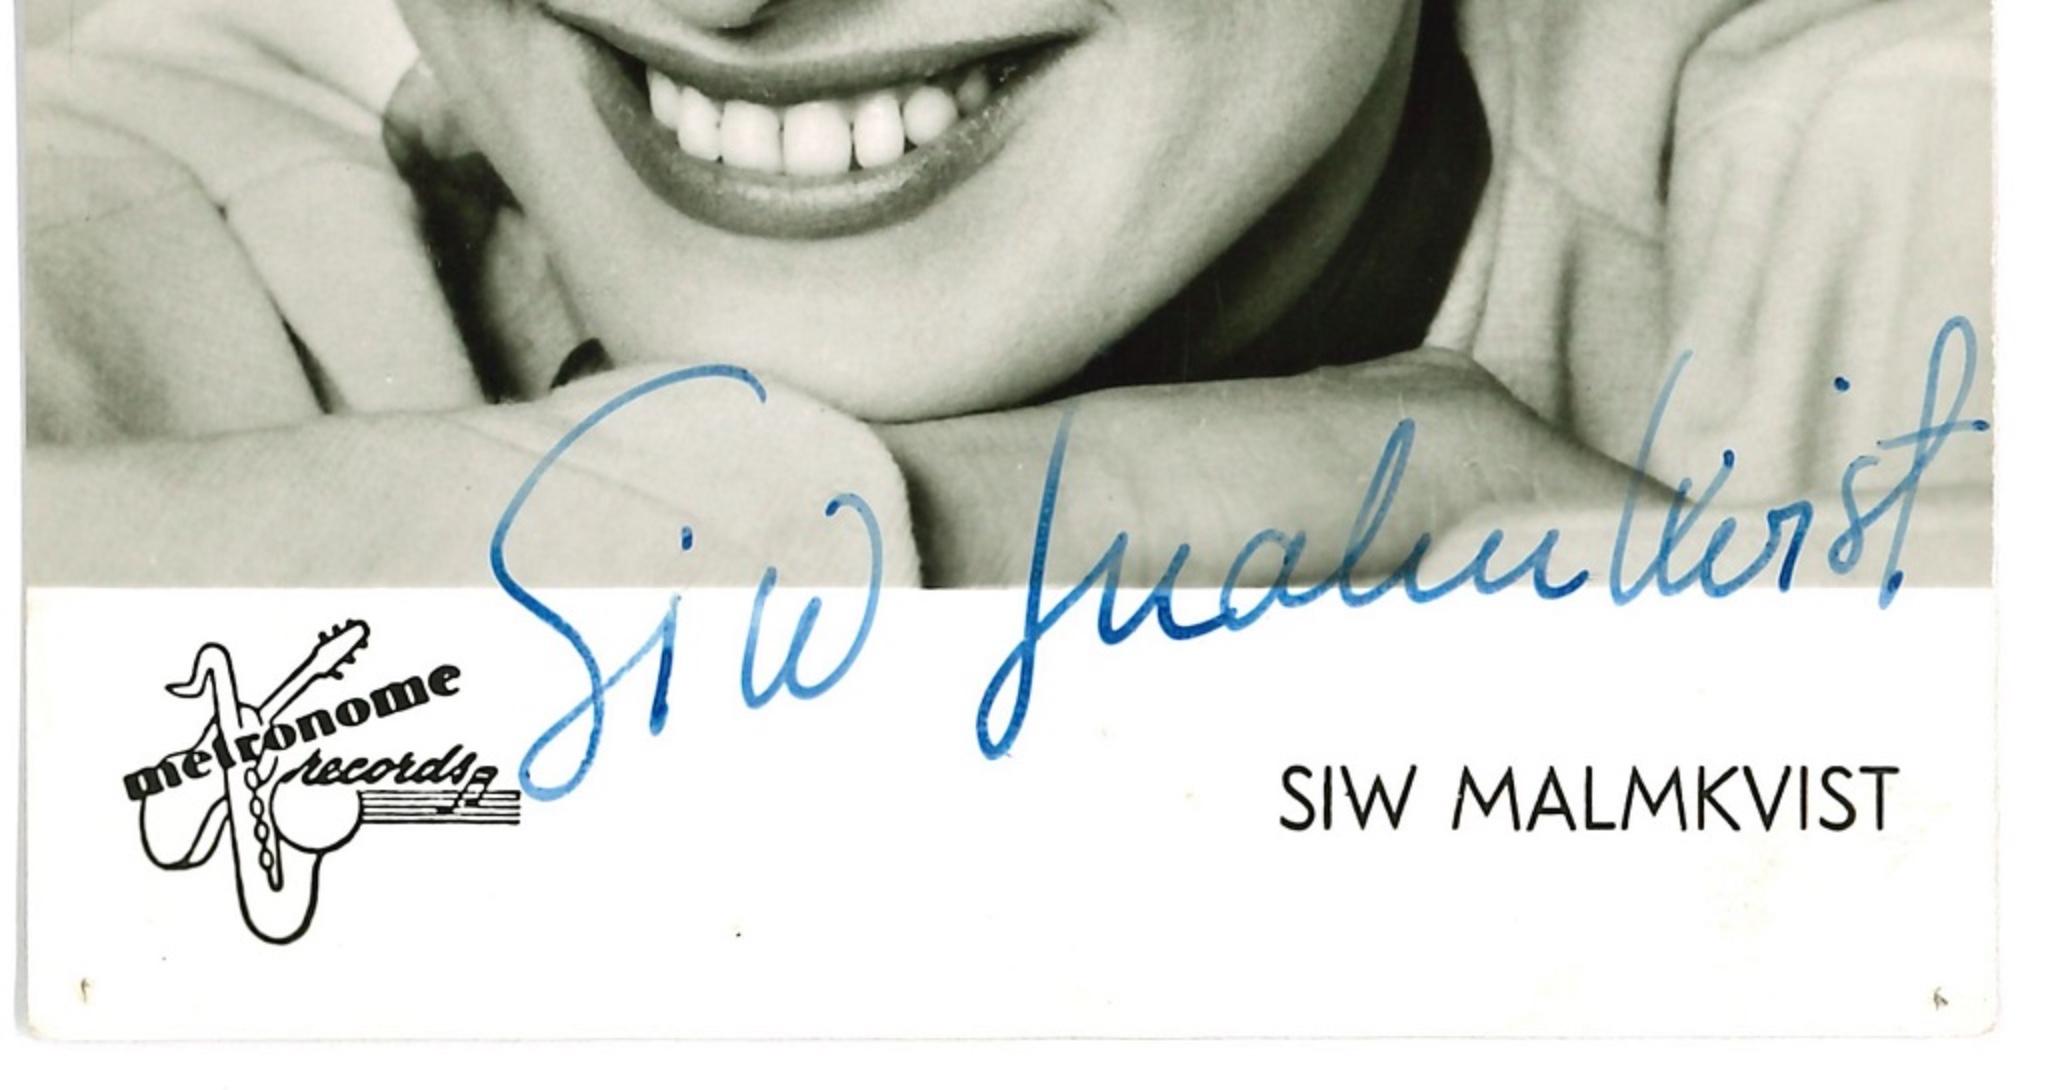 Autographed Portrait of Siw Malmkvist - 1960s - Photograph by Unknown